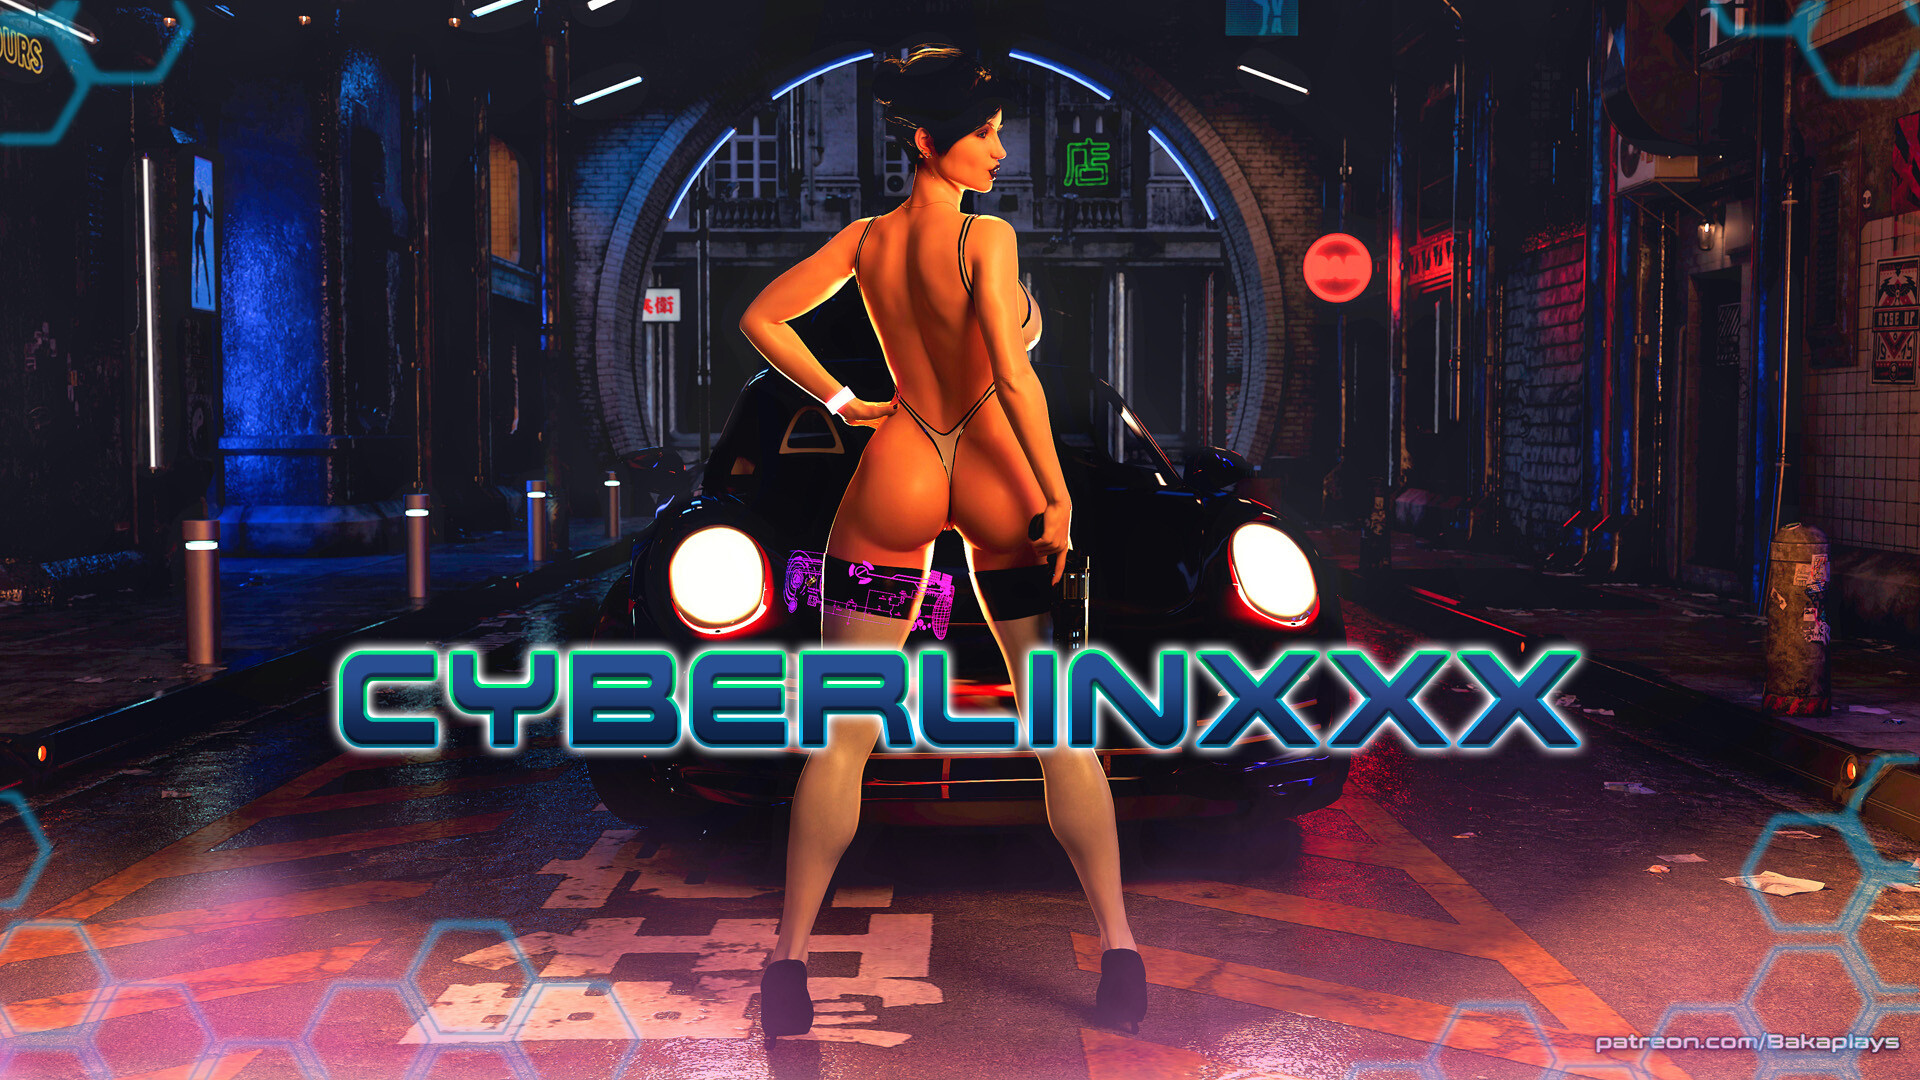 Cyberlinxxx Main Image